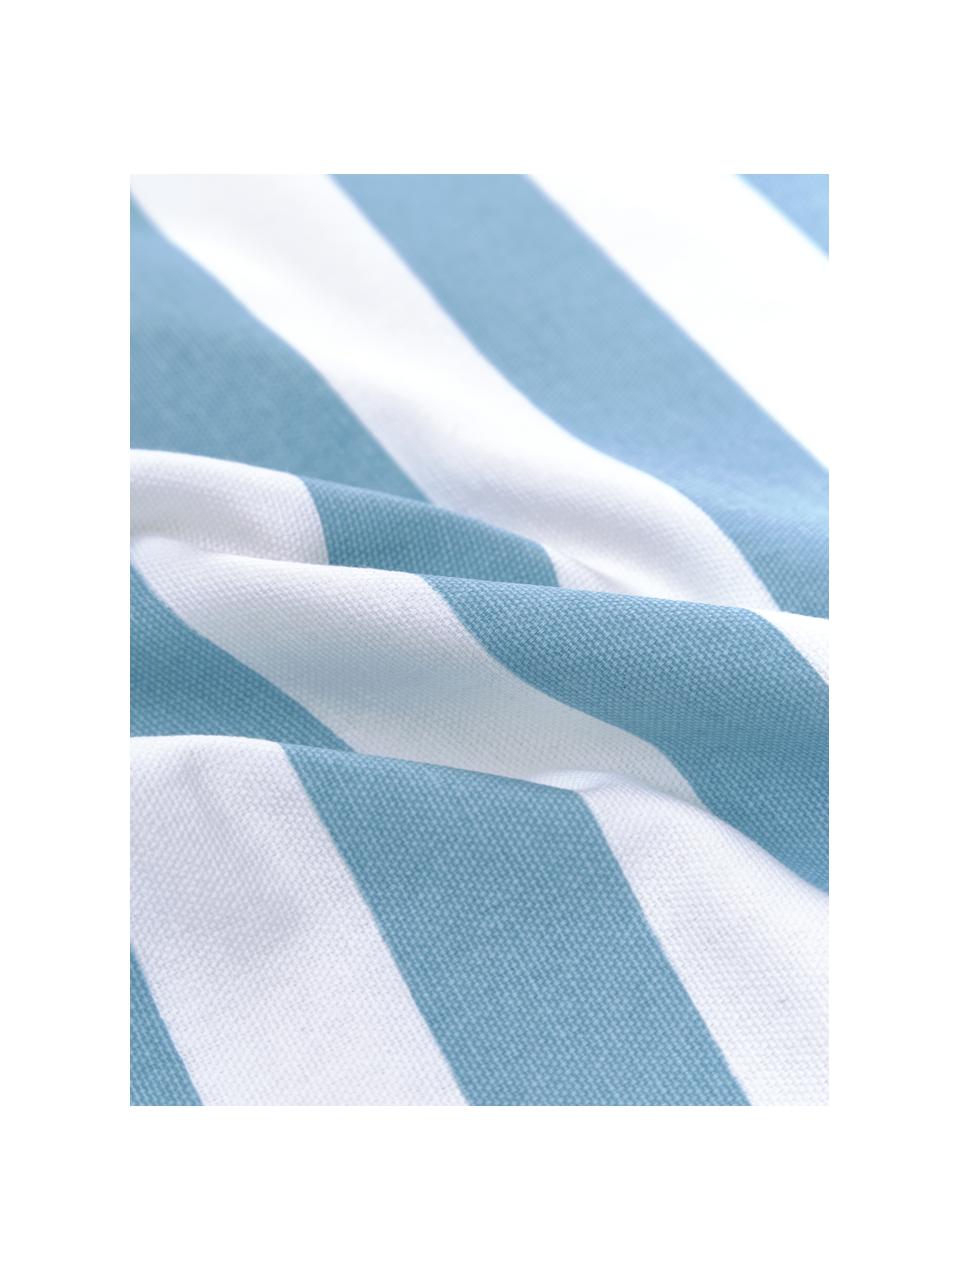 Federa arredo a righe color blu/bianco Timon, 100% cotone, Blu, bianco, Larg. 30 x Lung. 50 cm